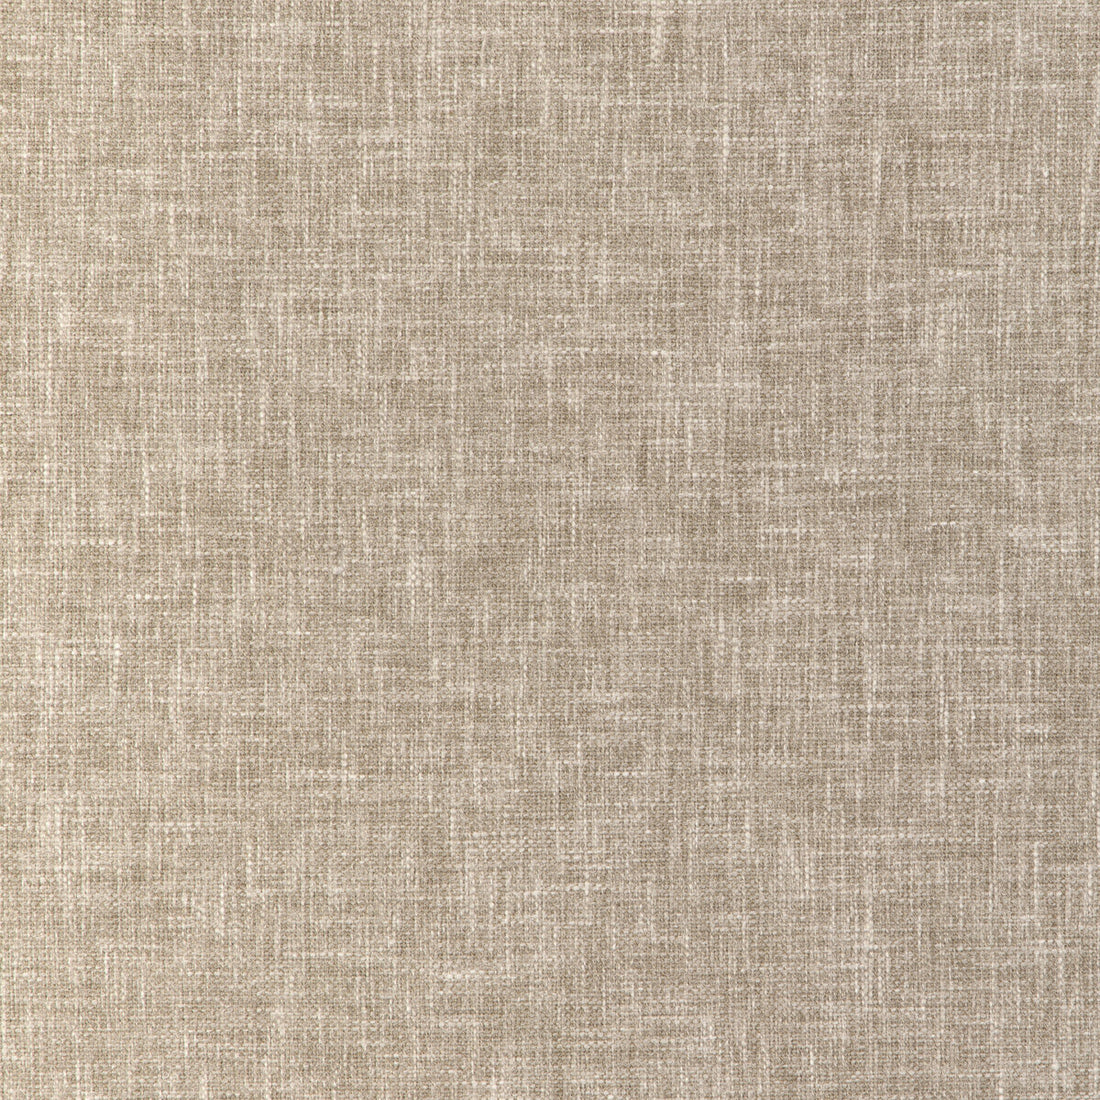 Kravet Smart fabric in 36657-106 color - pattern 36657.106.0 - by Kravet Smart in the Performance Kravetarmor collection